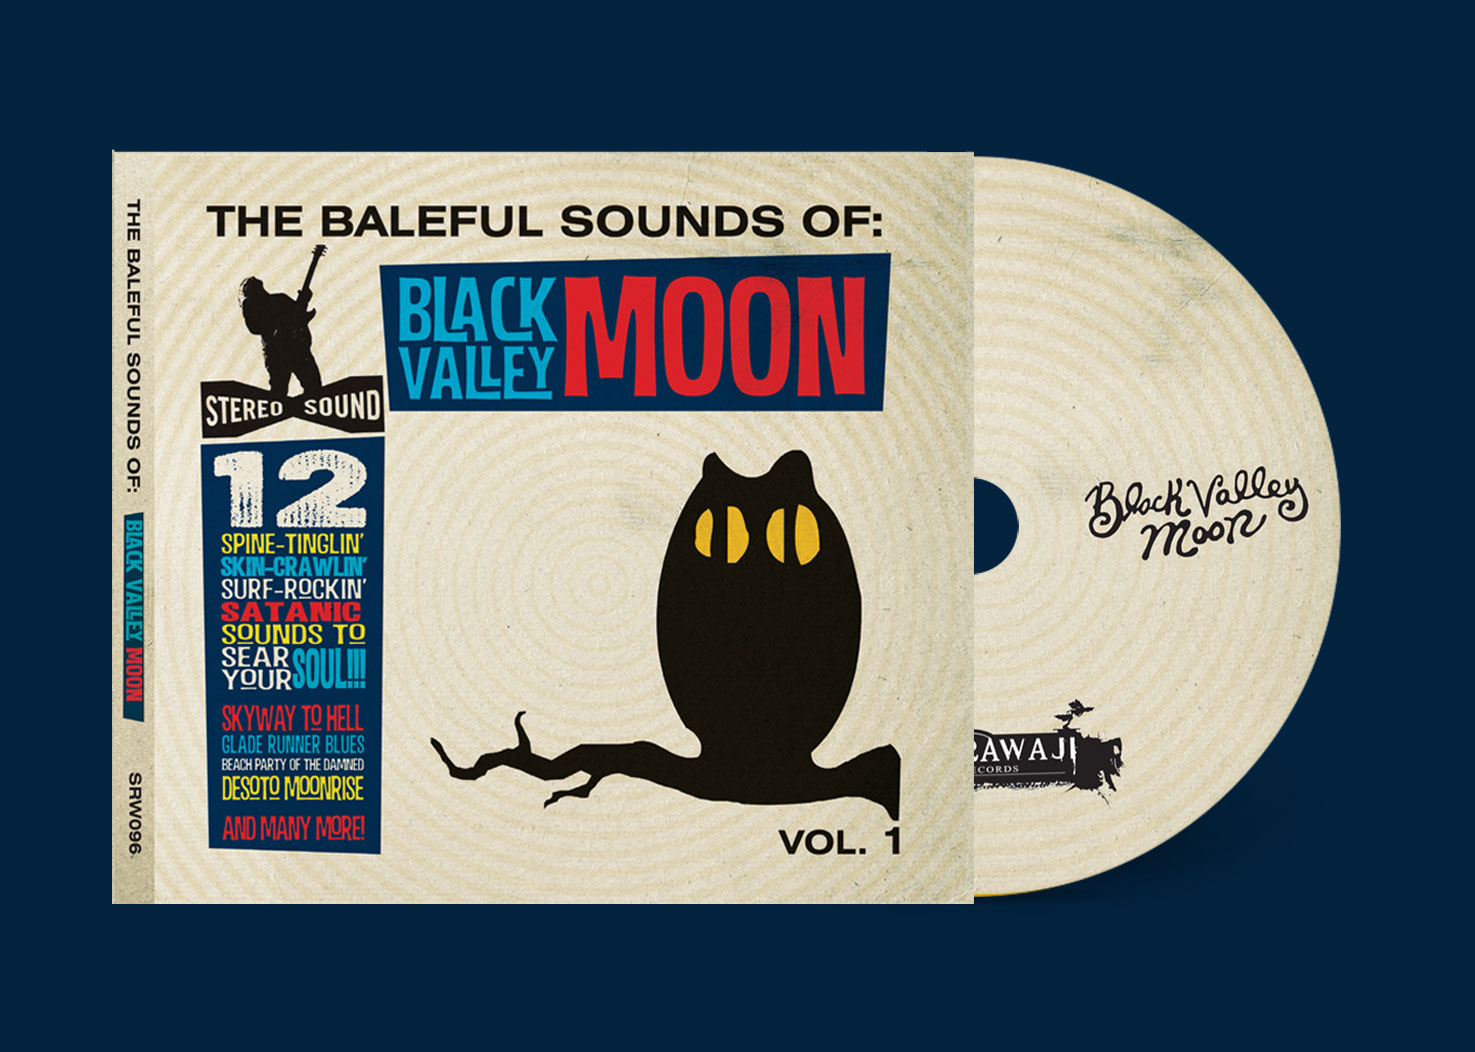 SRW095-Black-Valley-Moon-promo6 Black Valley Moon "The Baleful Sounds Of Black Valley Moon Vol.1" - SHARAWAJI.COM